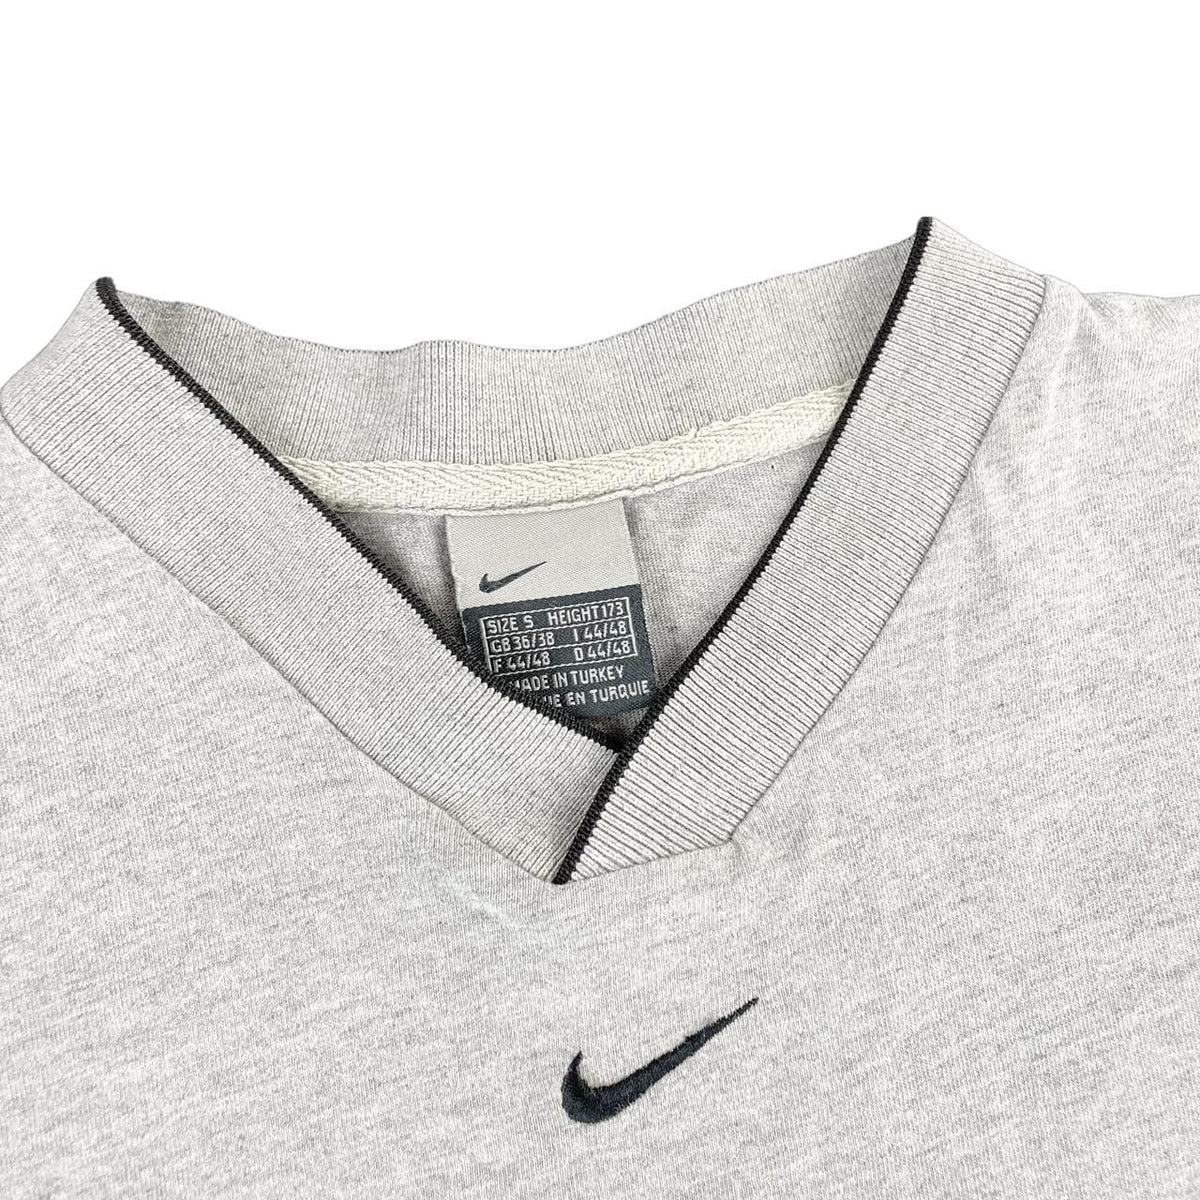 Nike Centre swoosh t shirt size S